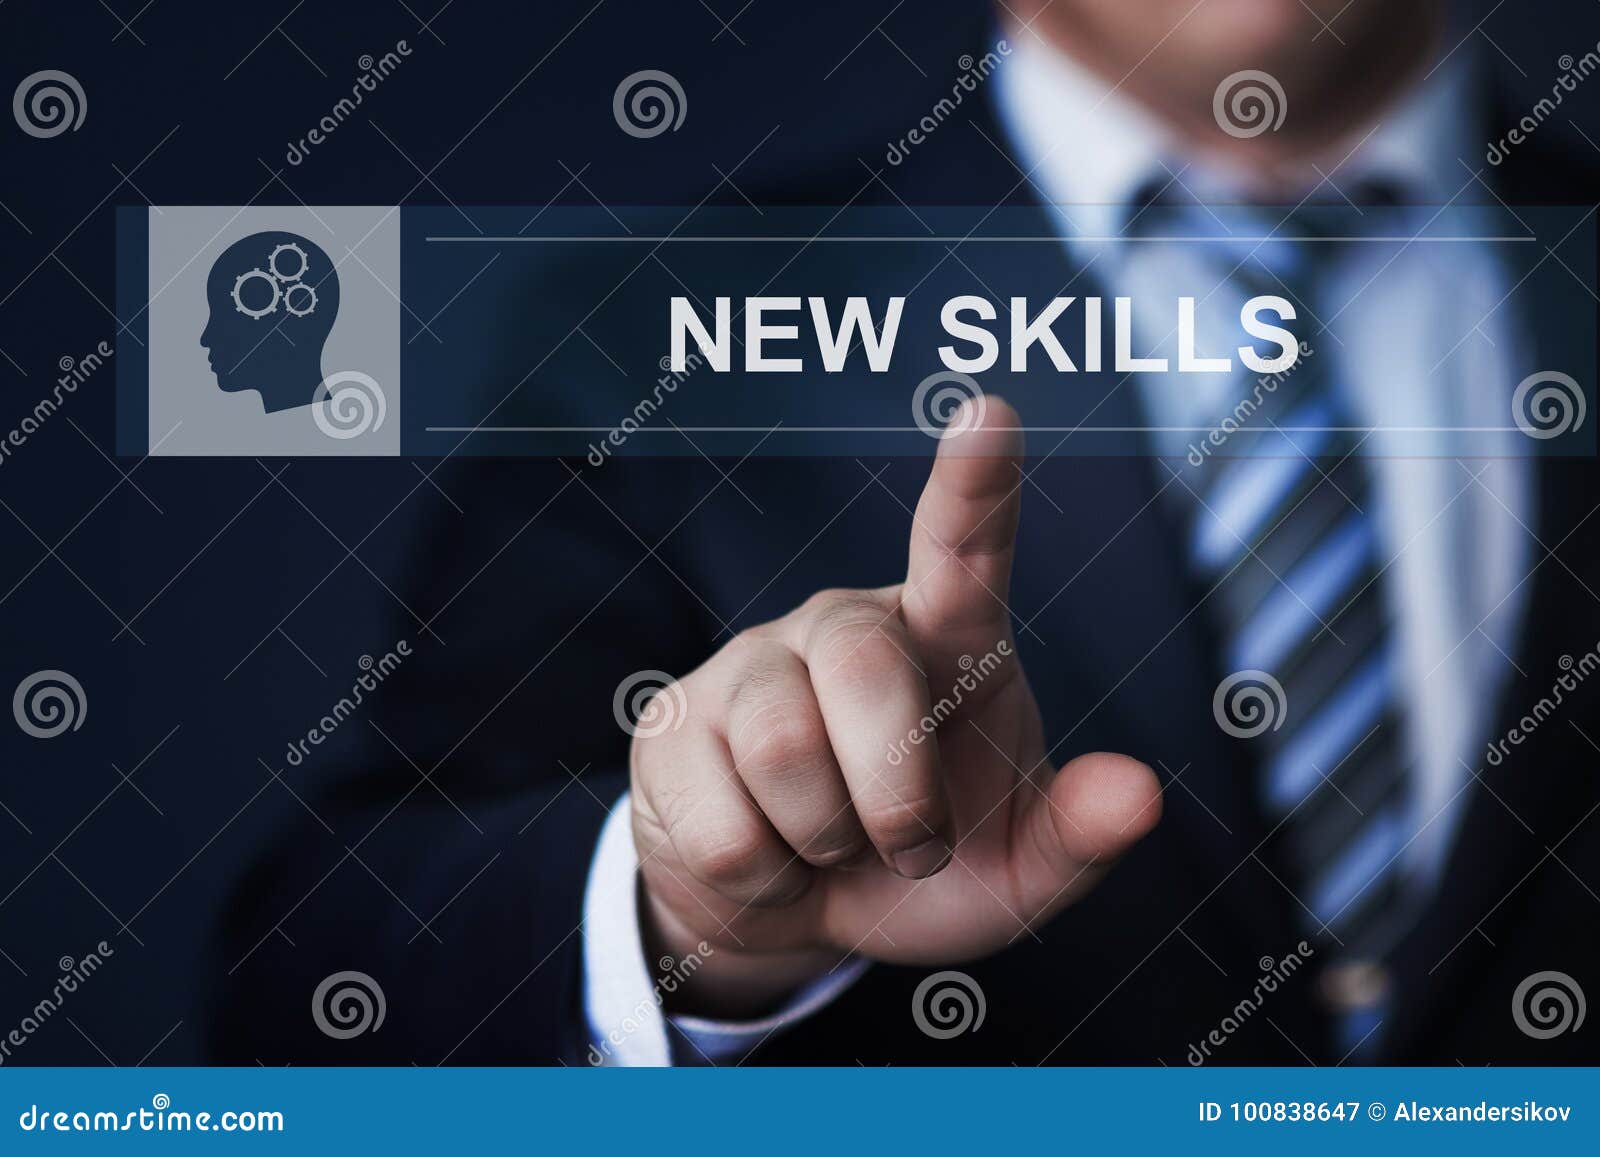 new skills knowledge webinar training business internet technology concept